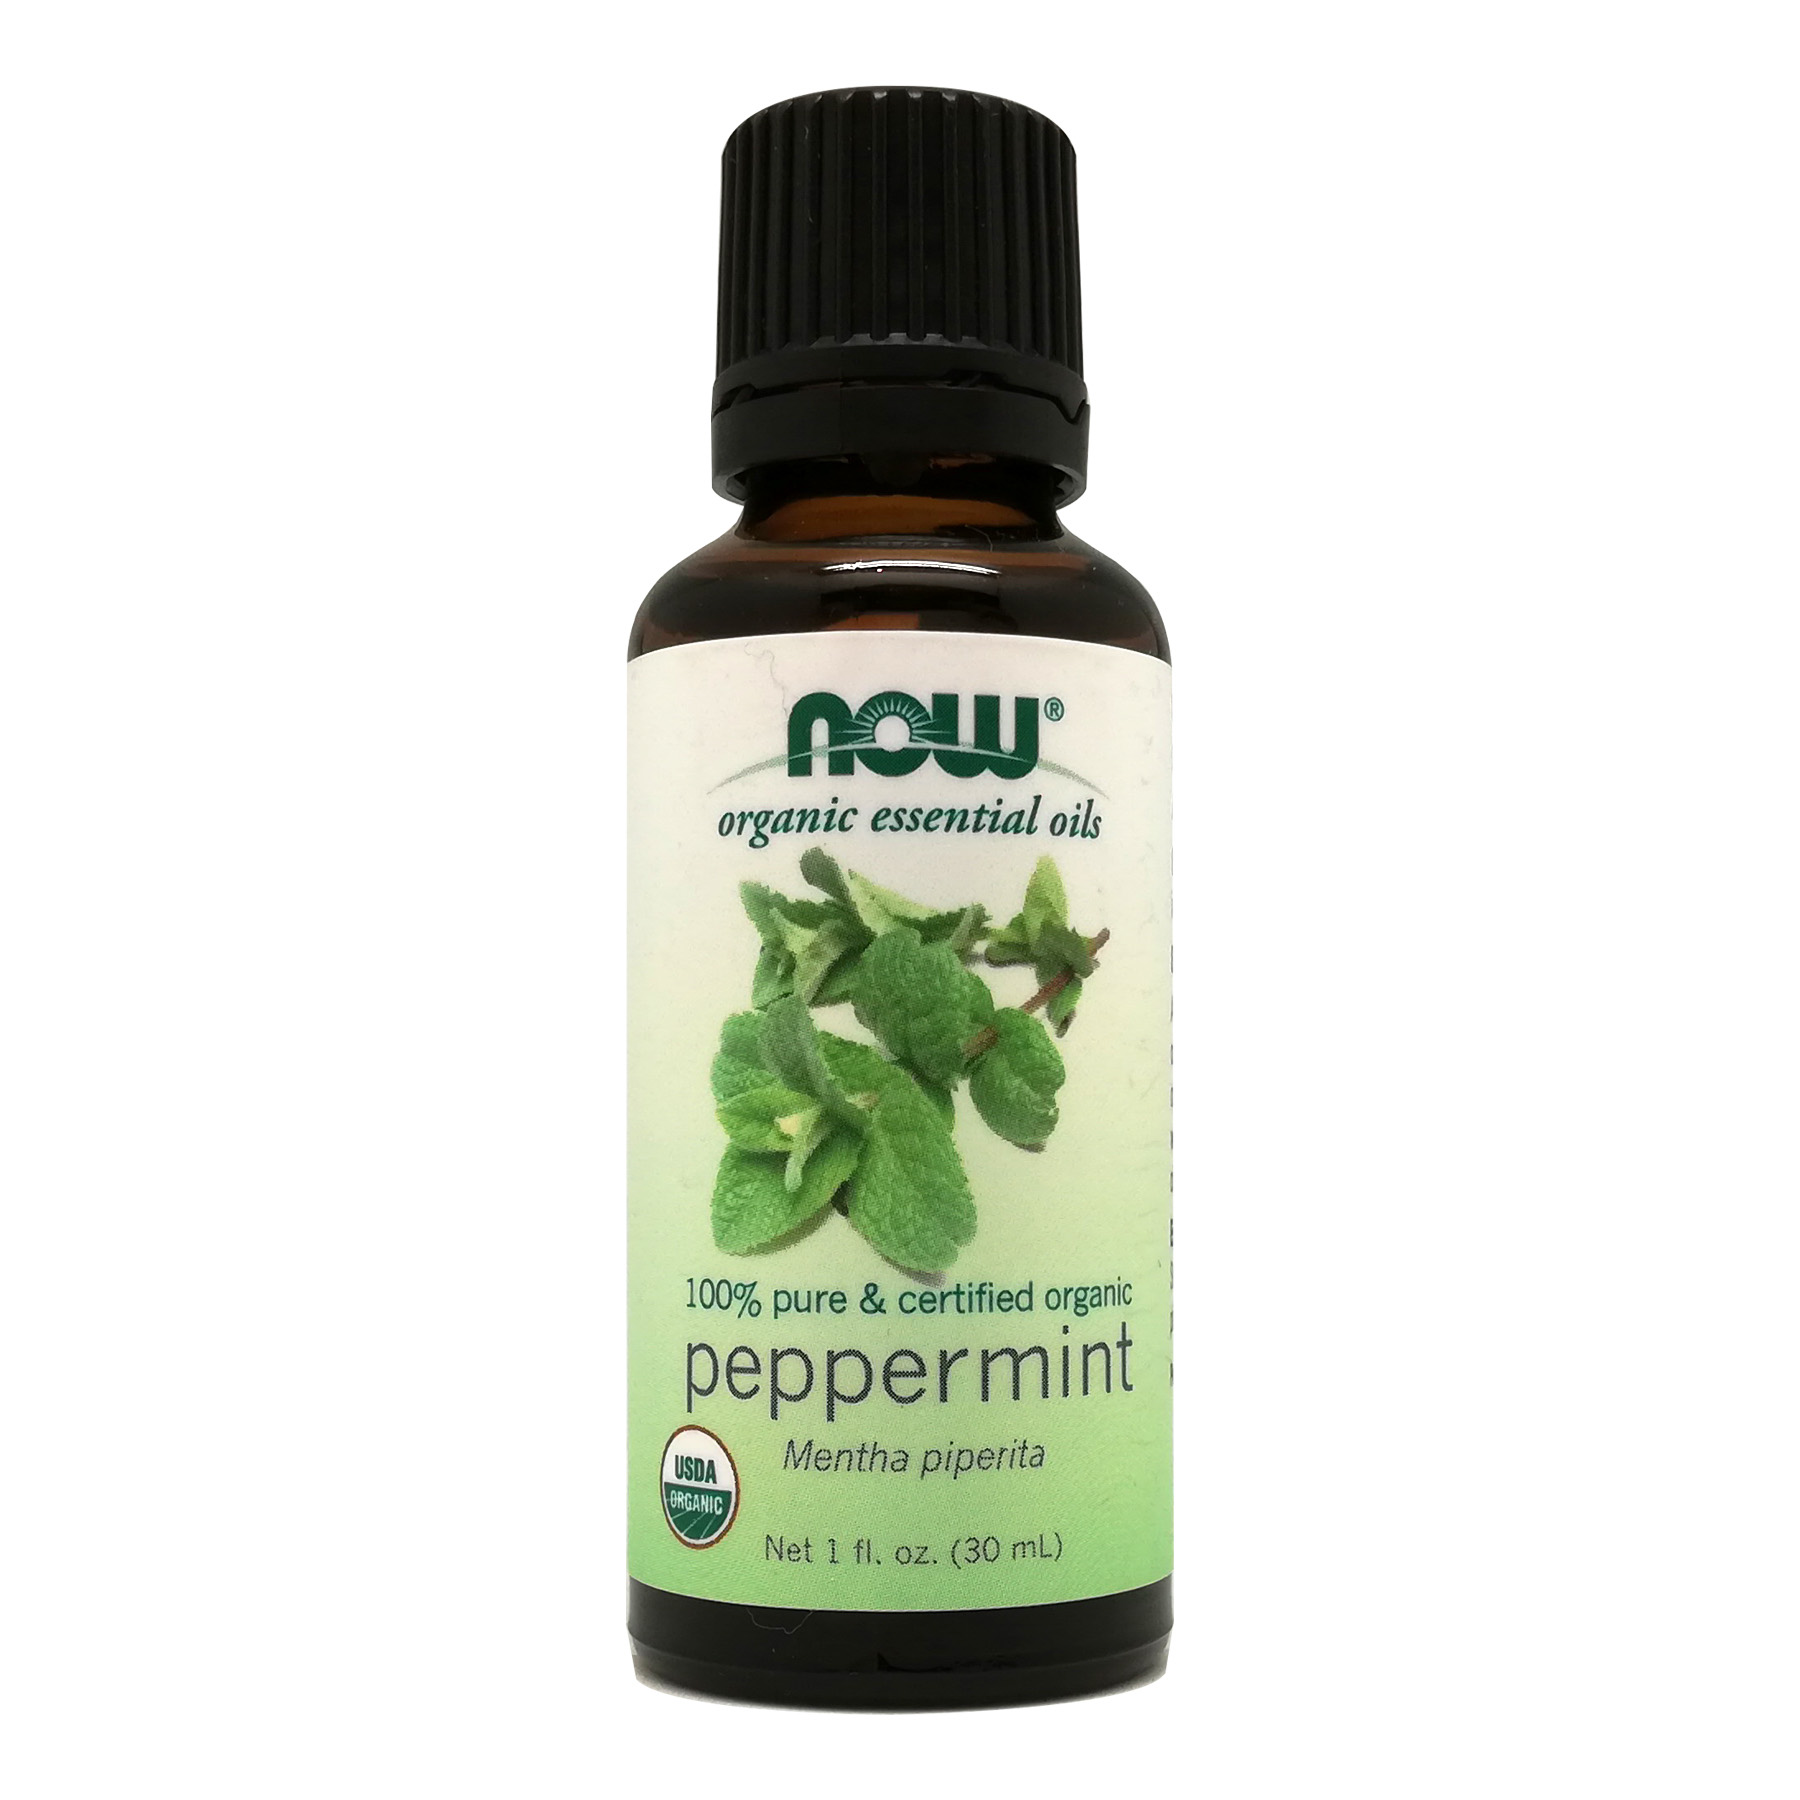 peppermint oil good for